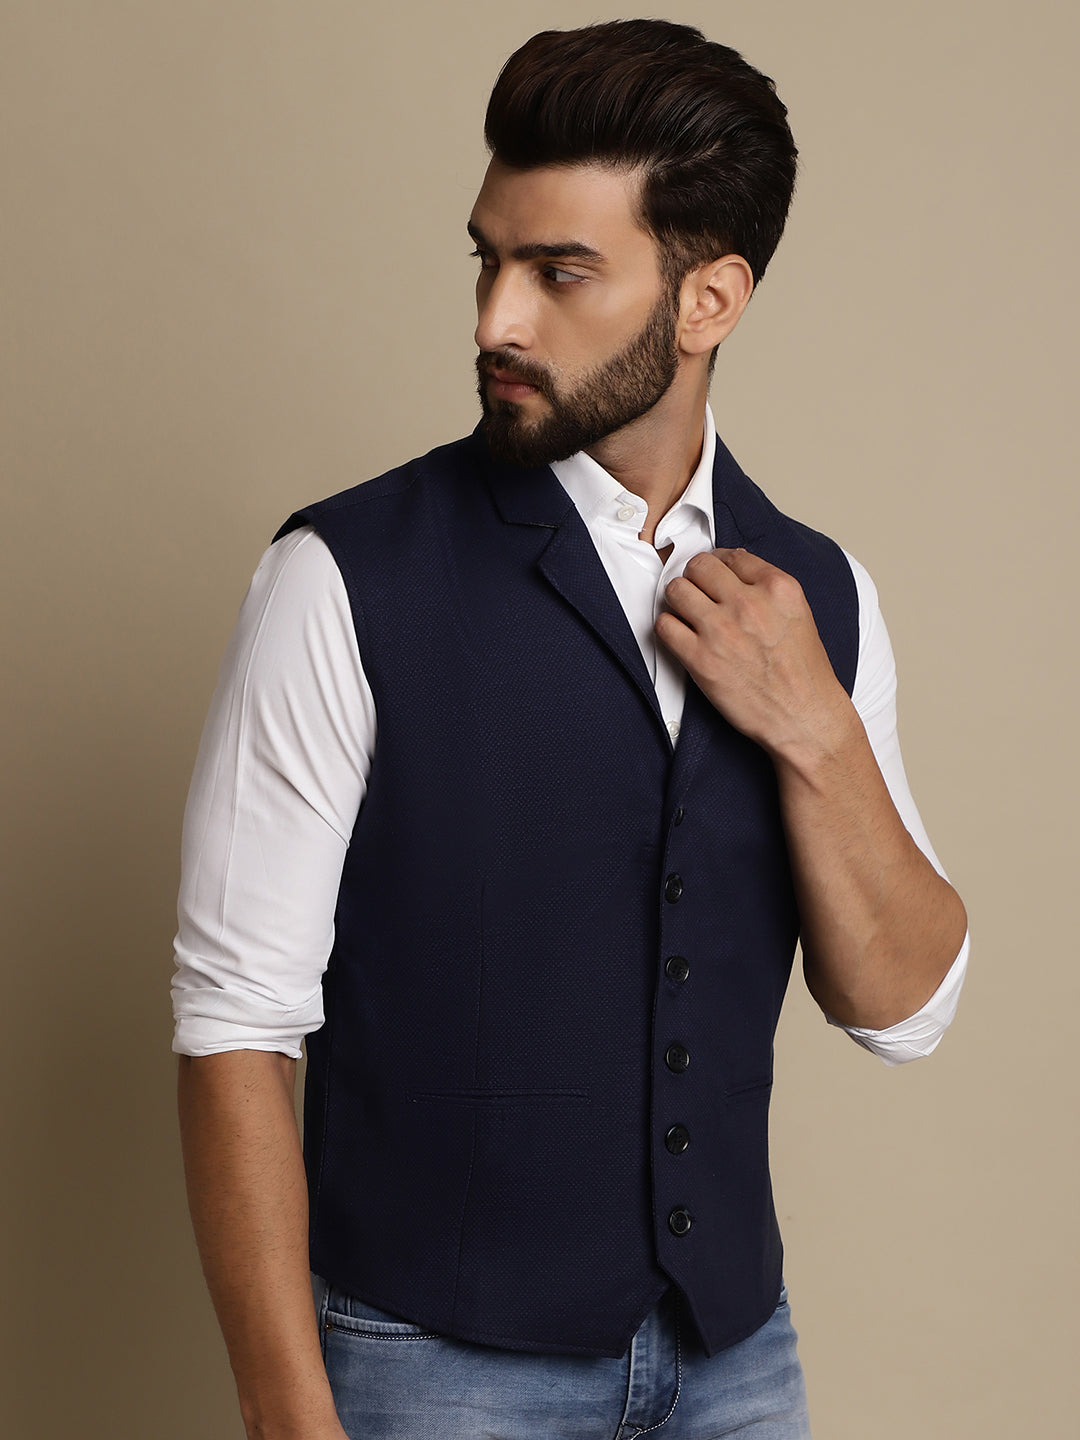 Men's Waistcoat With Notched Lapel - Even Apparels